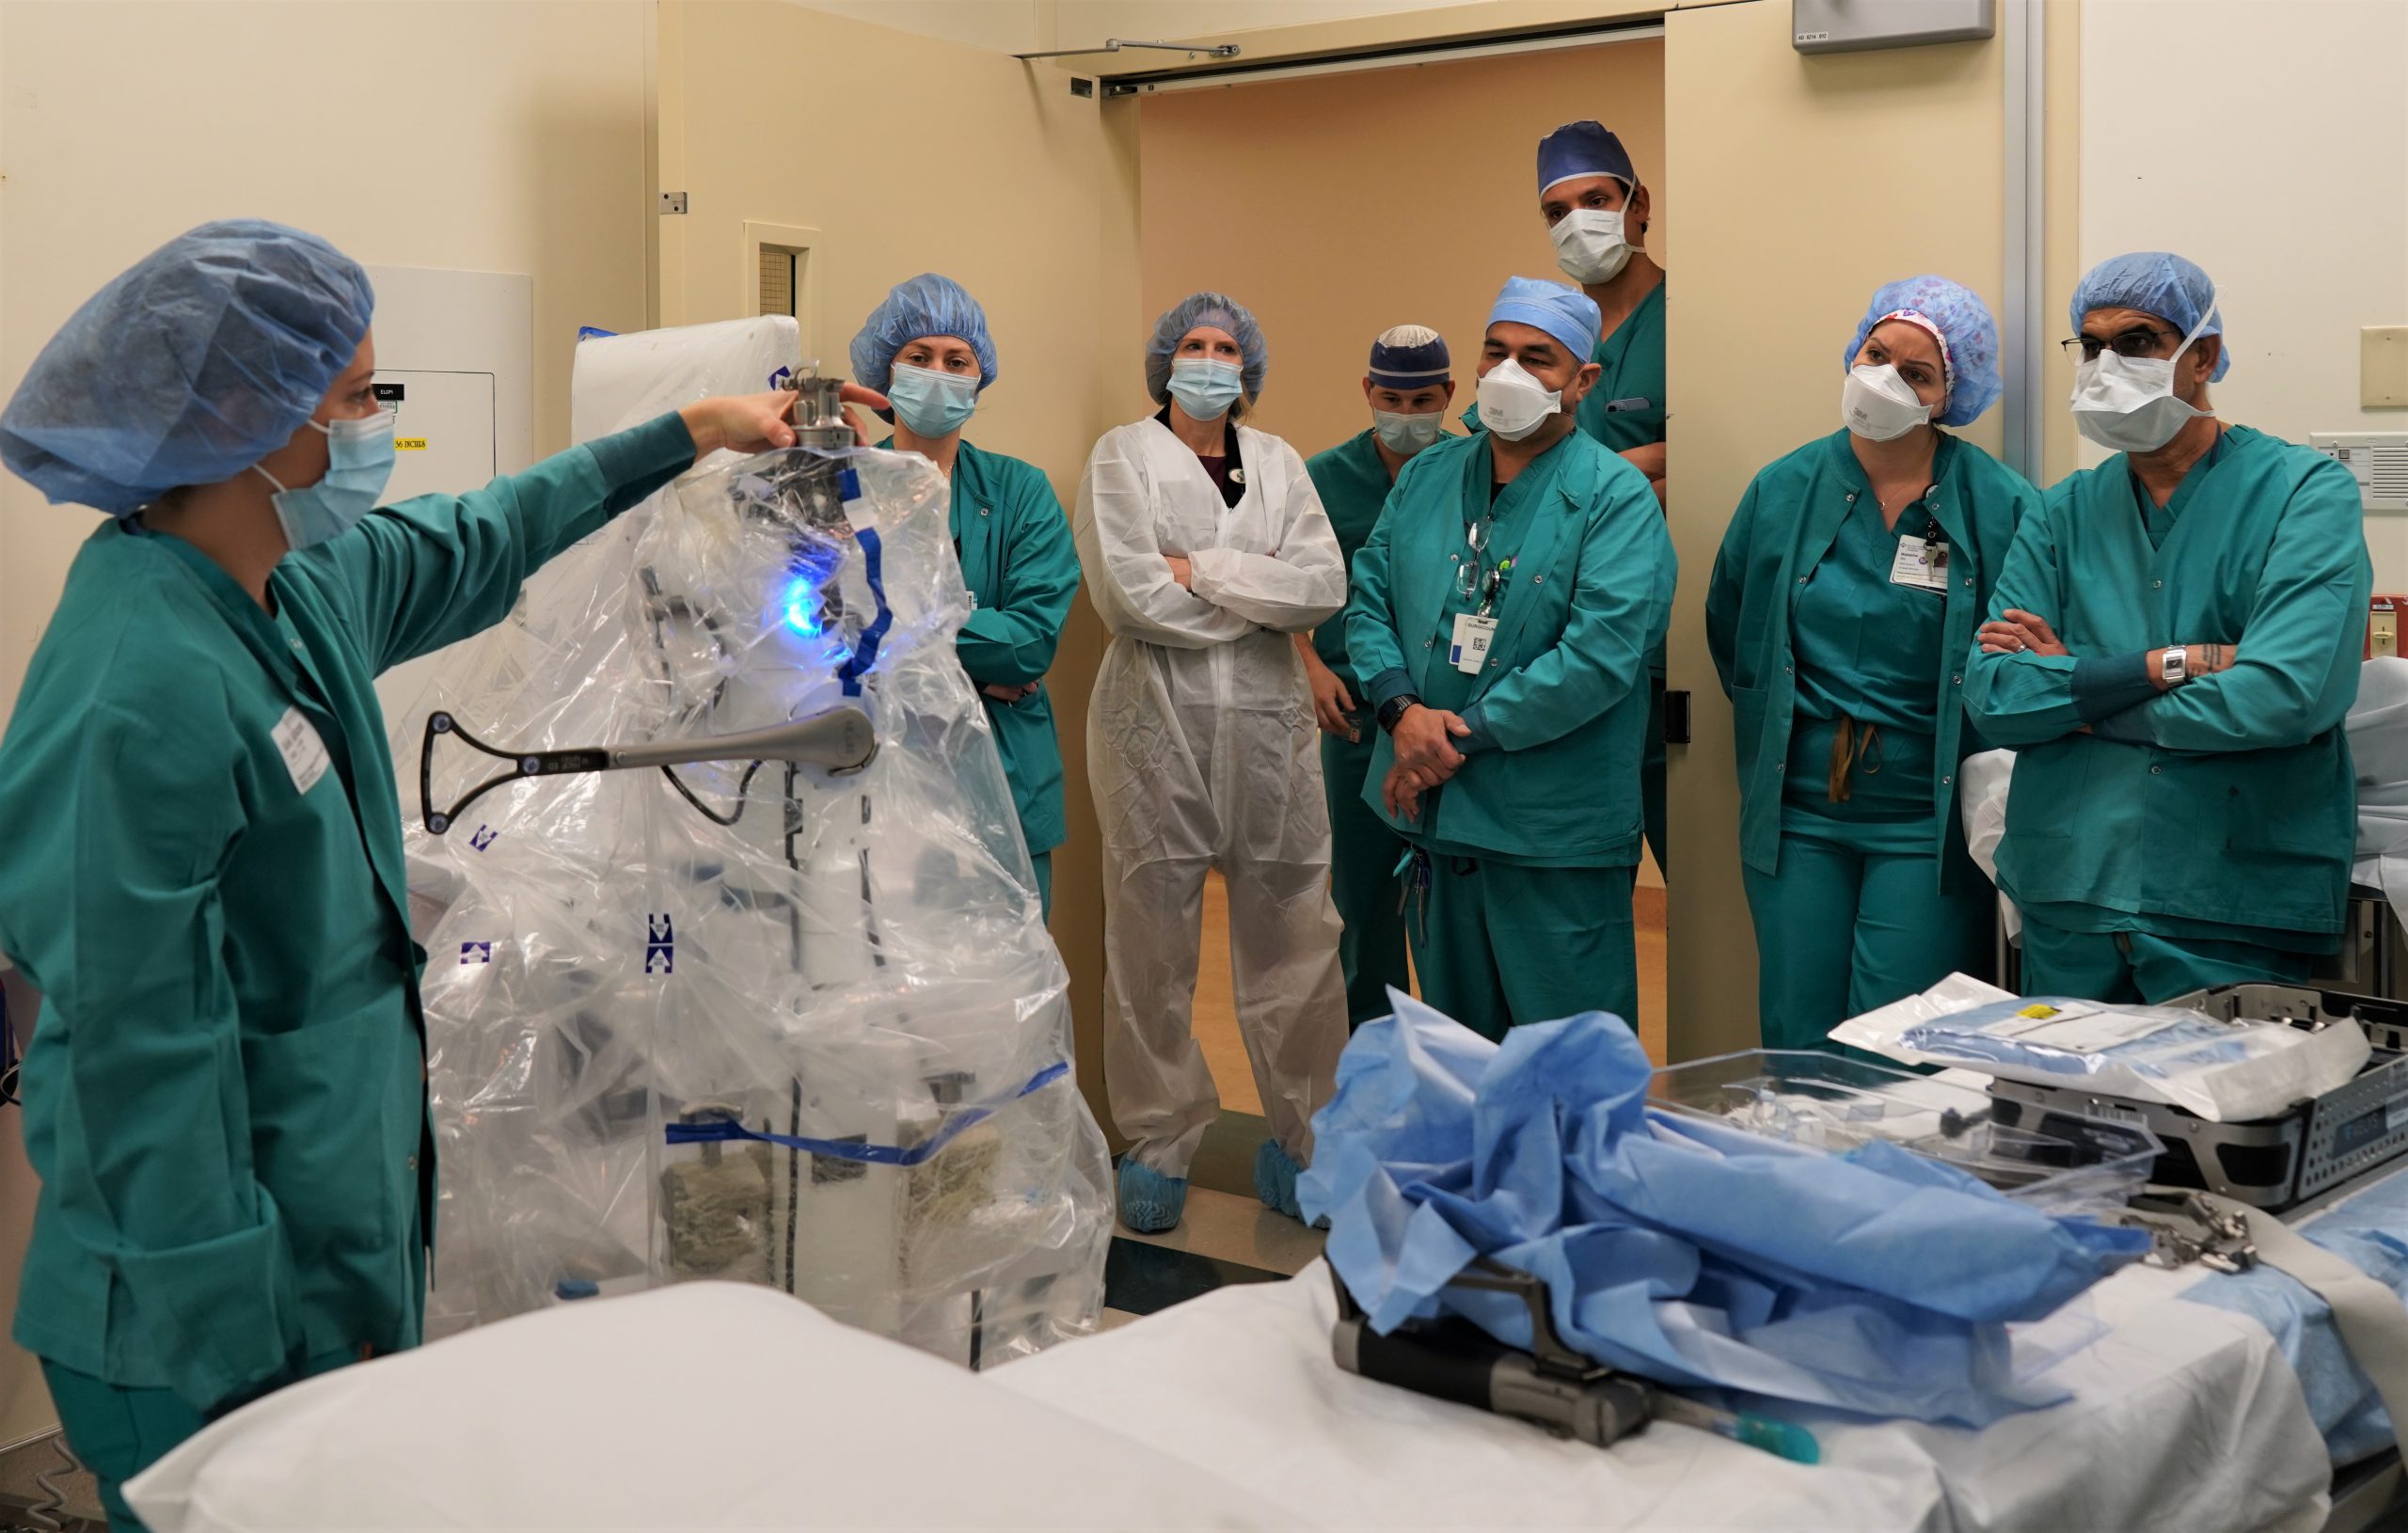 Operating room staff train on the VELYS® robot at Novato Community Hospital